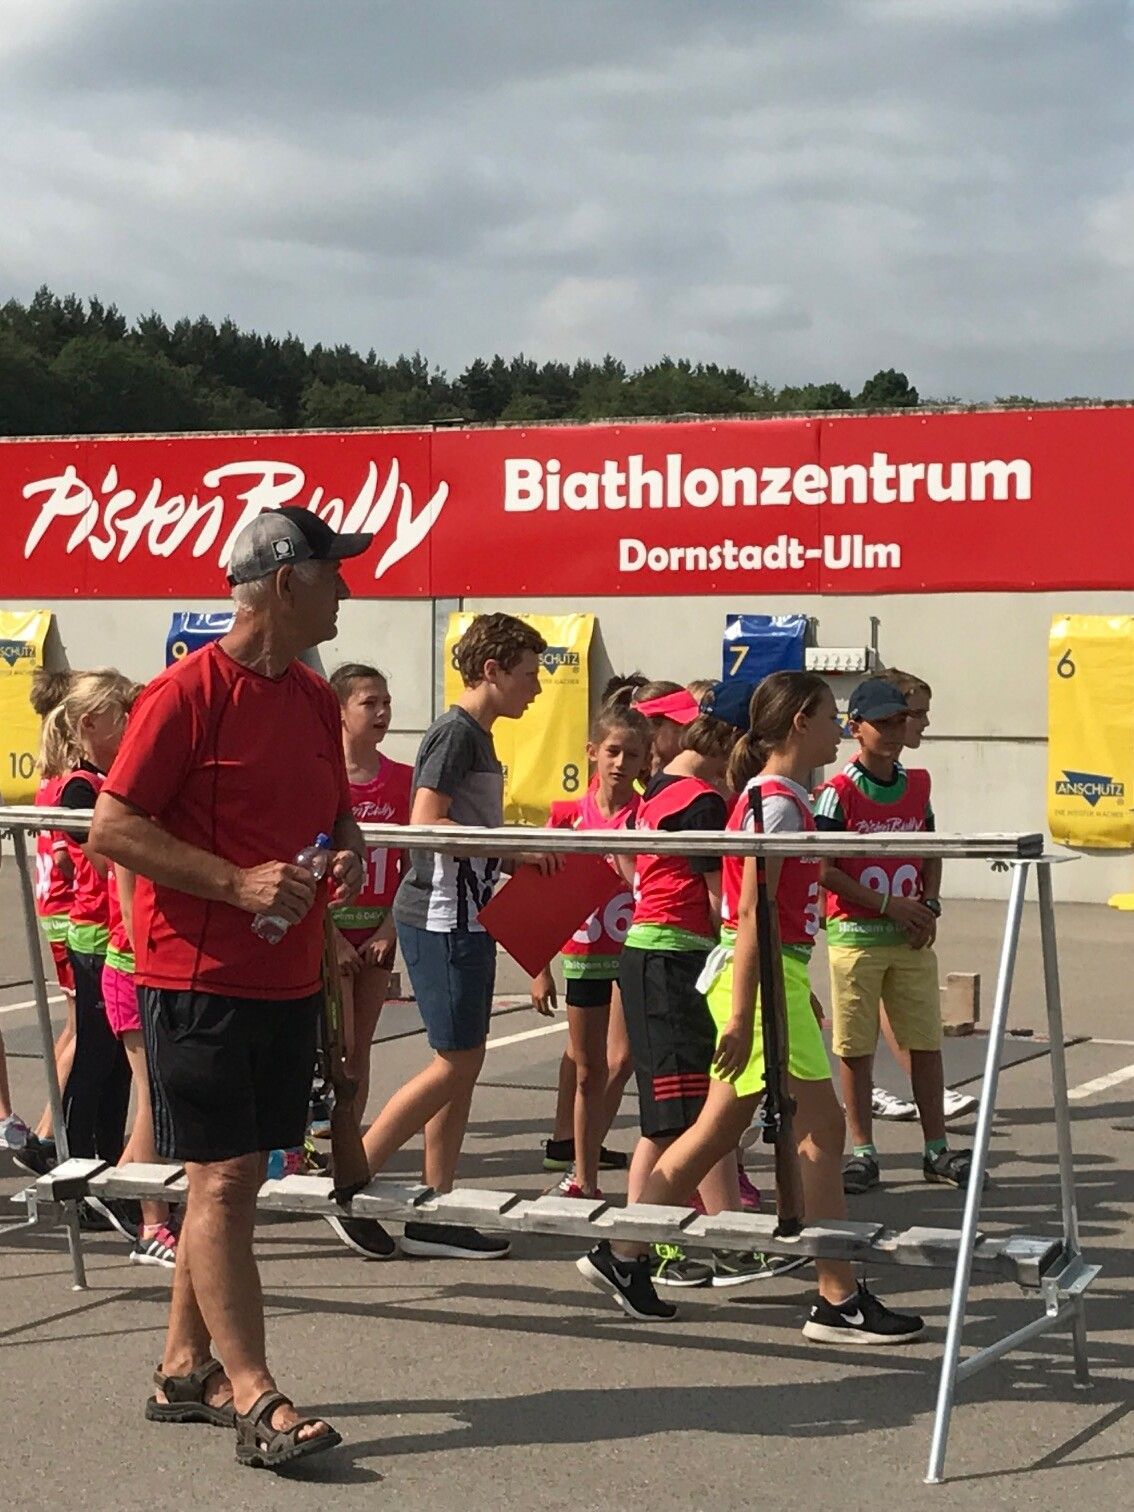 Kässbohrer PistenBully Patrocinio: PistenBully-Biathlonzentrum